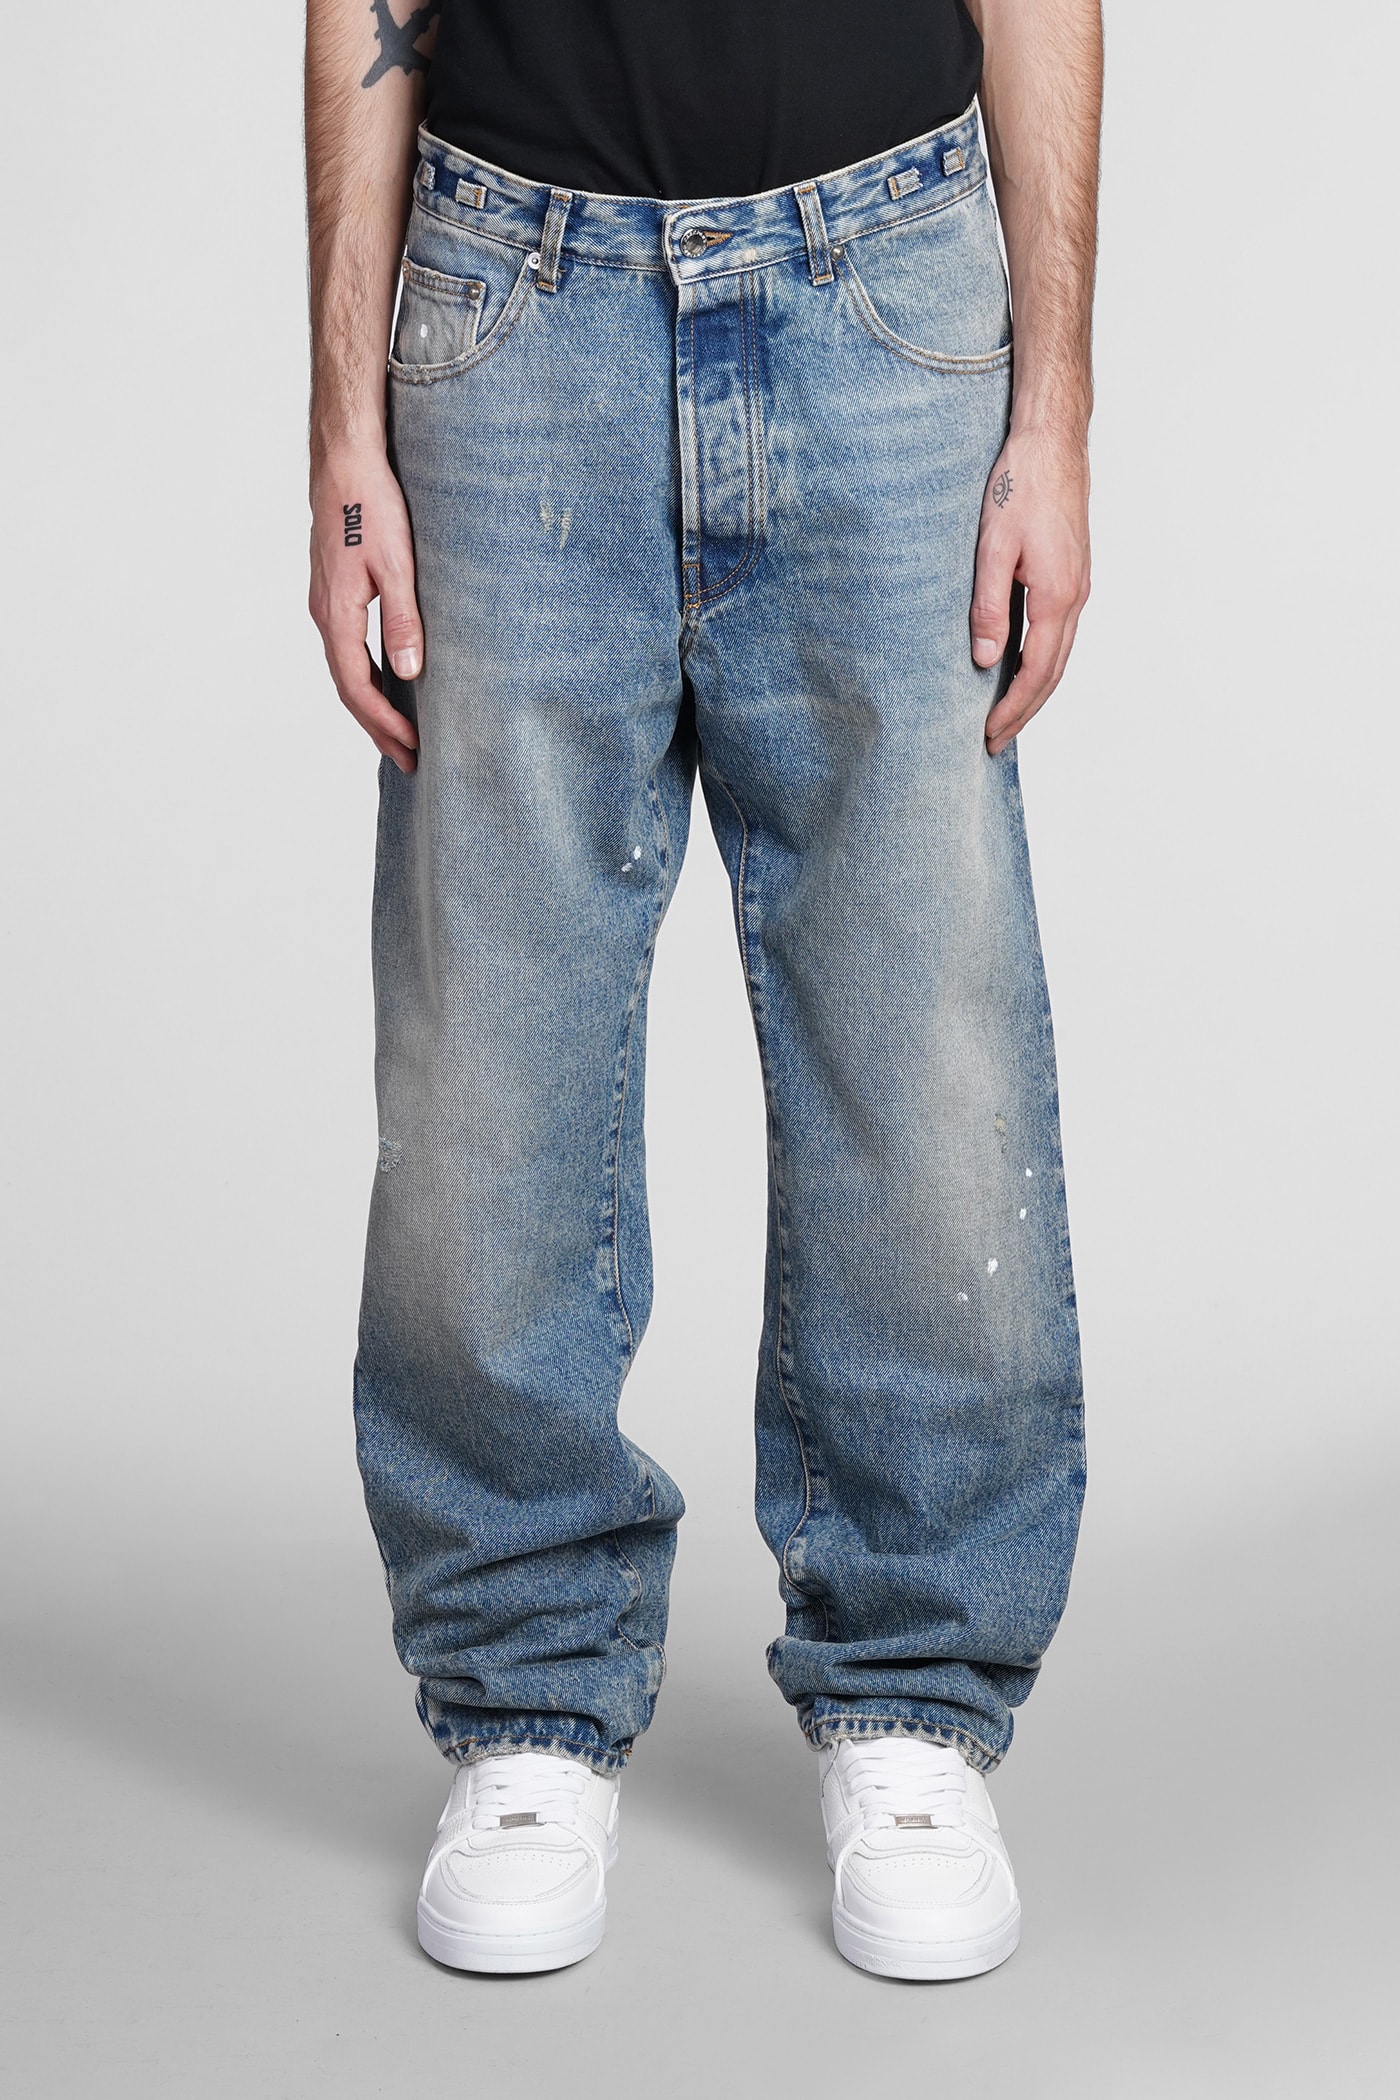 DARKPARK Mark Jeans In Cyan Denim